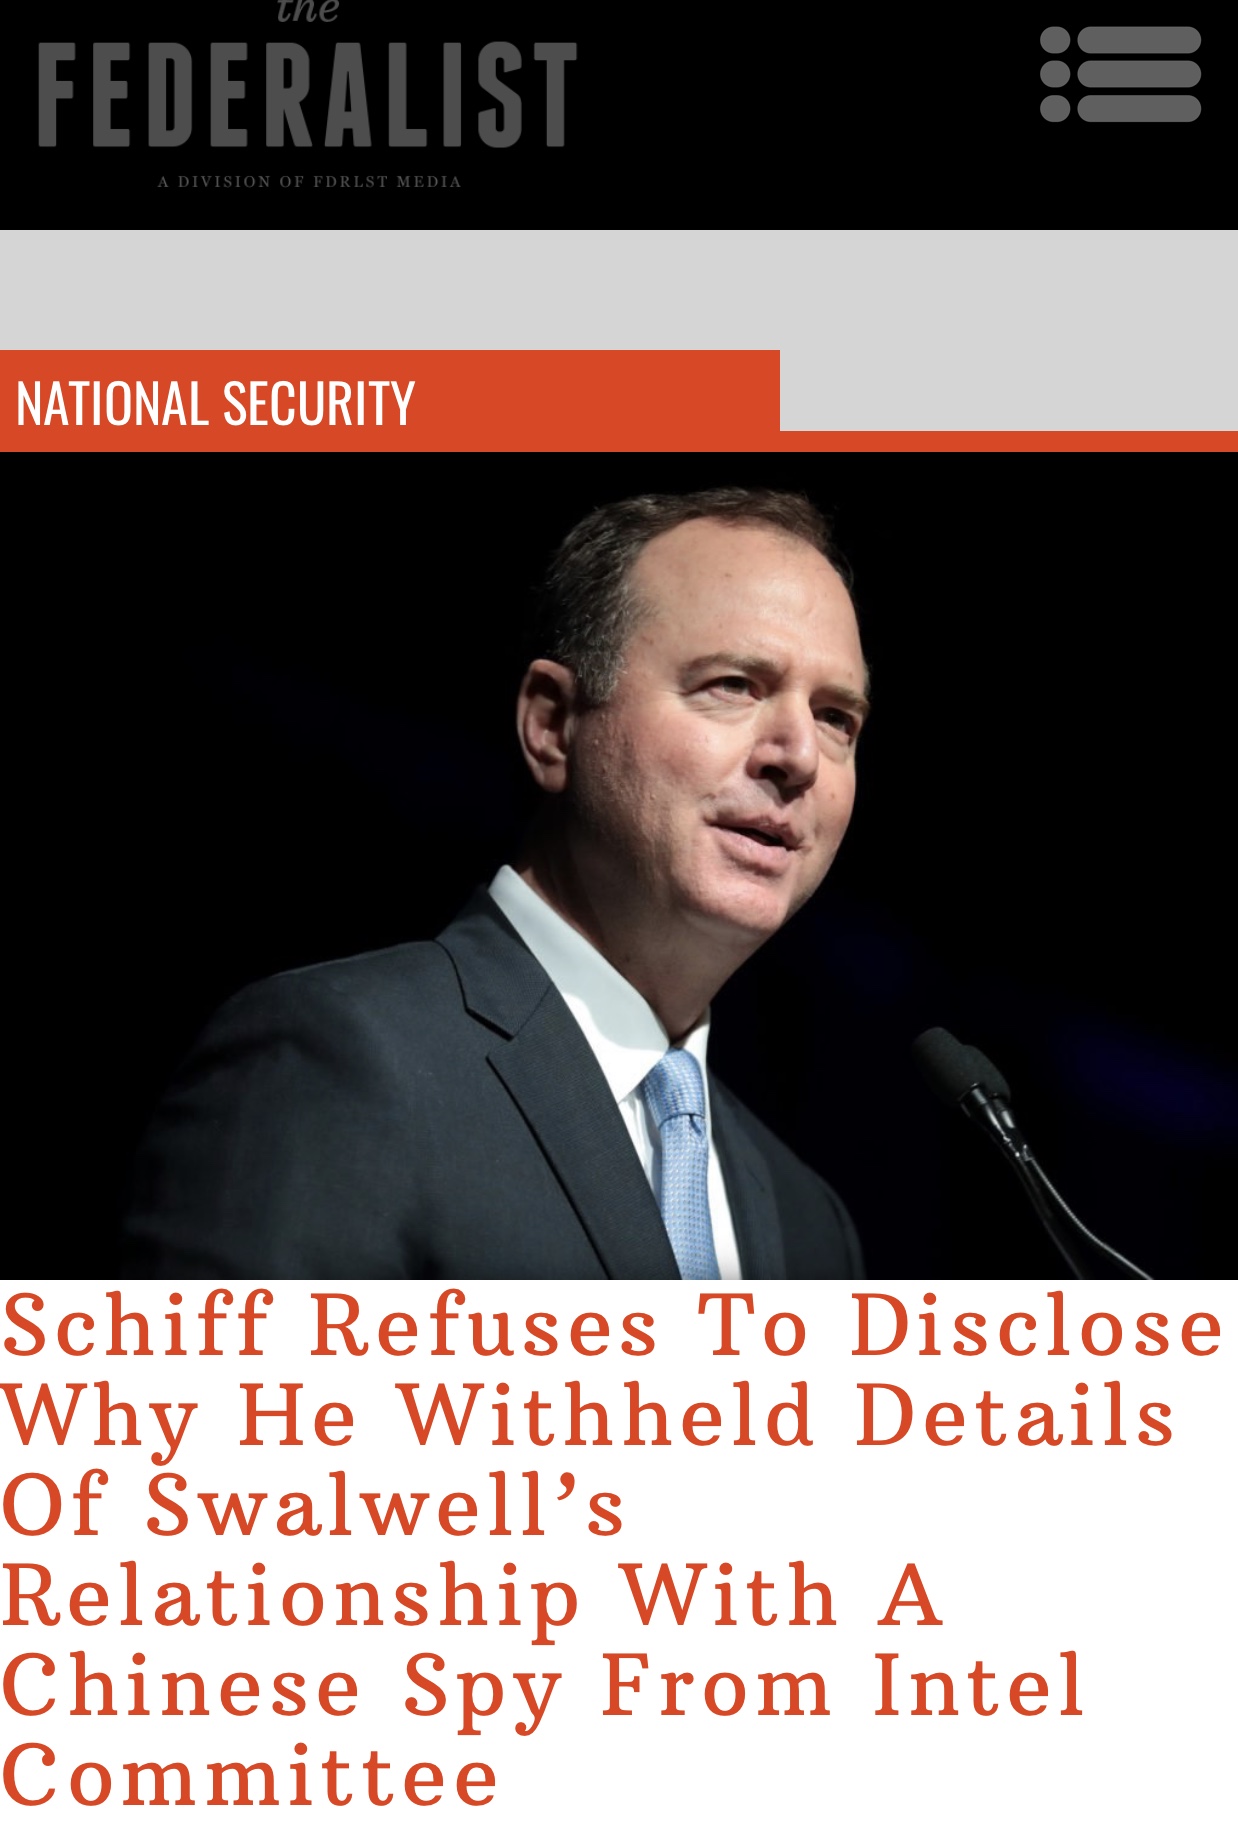 Adam Schiff Refuses to Disclose Swalwell’s Involment with CCP Spy